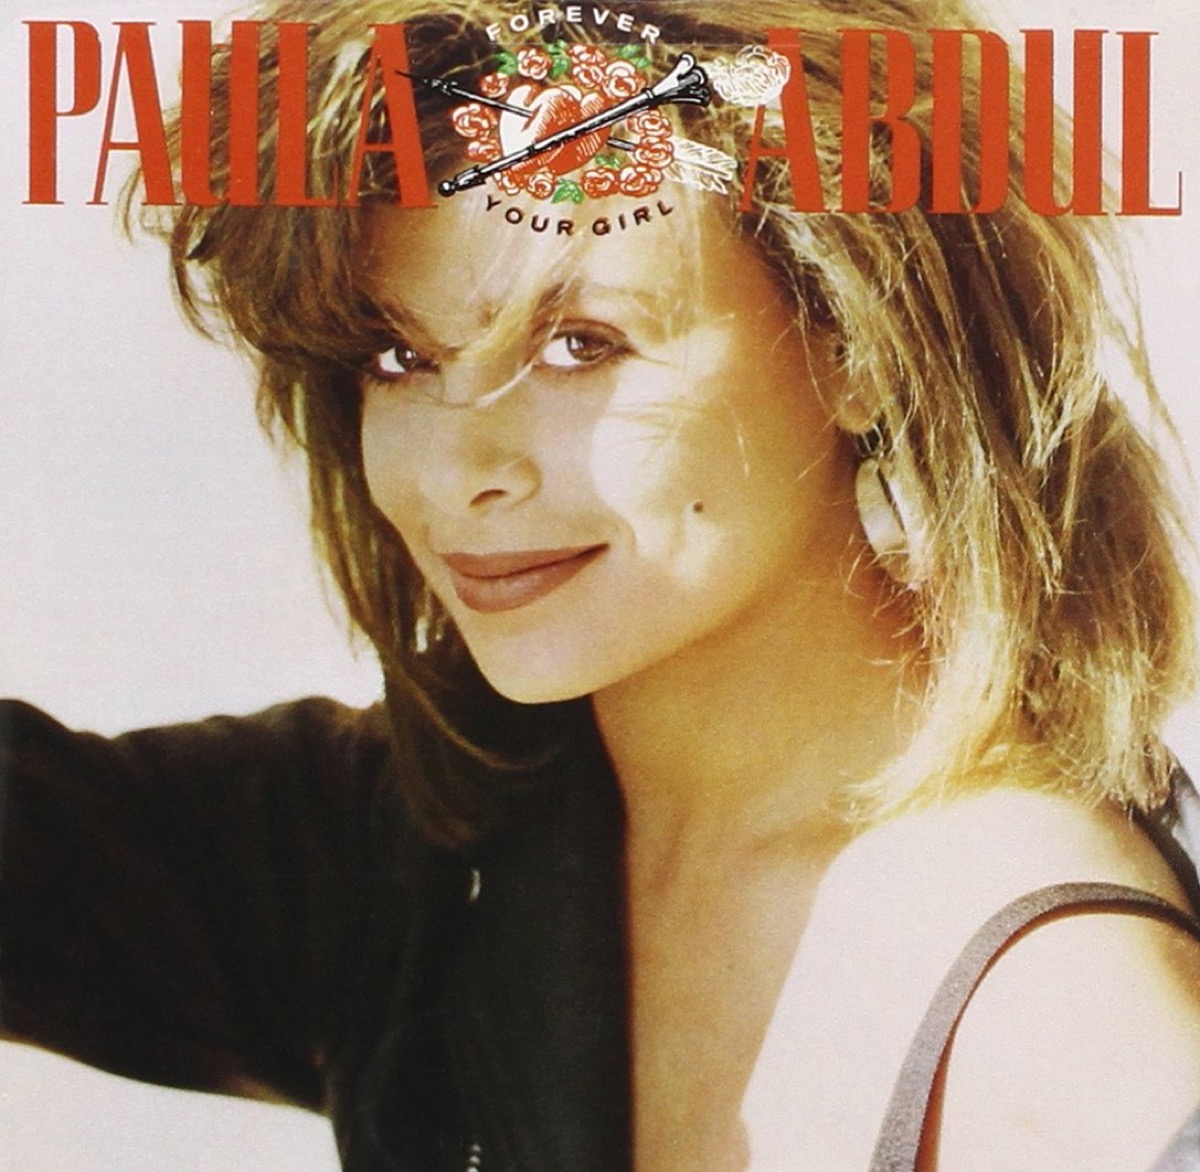 Paula Abdul "Forever Your Girl" album cover